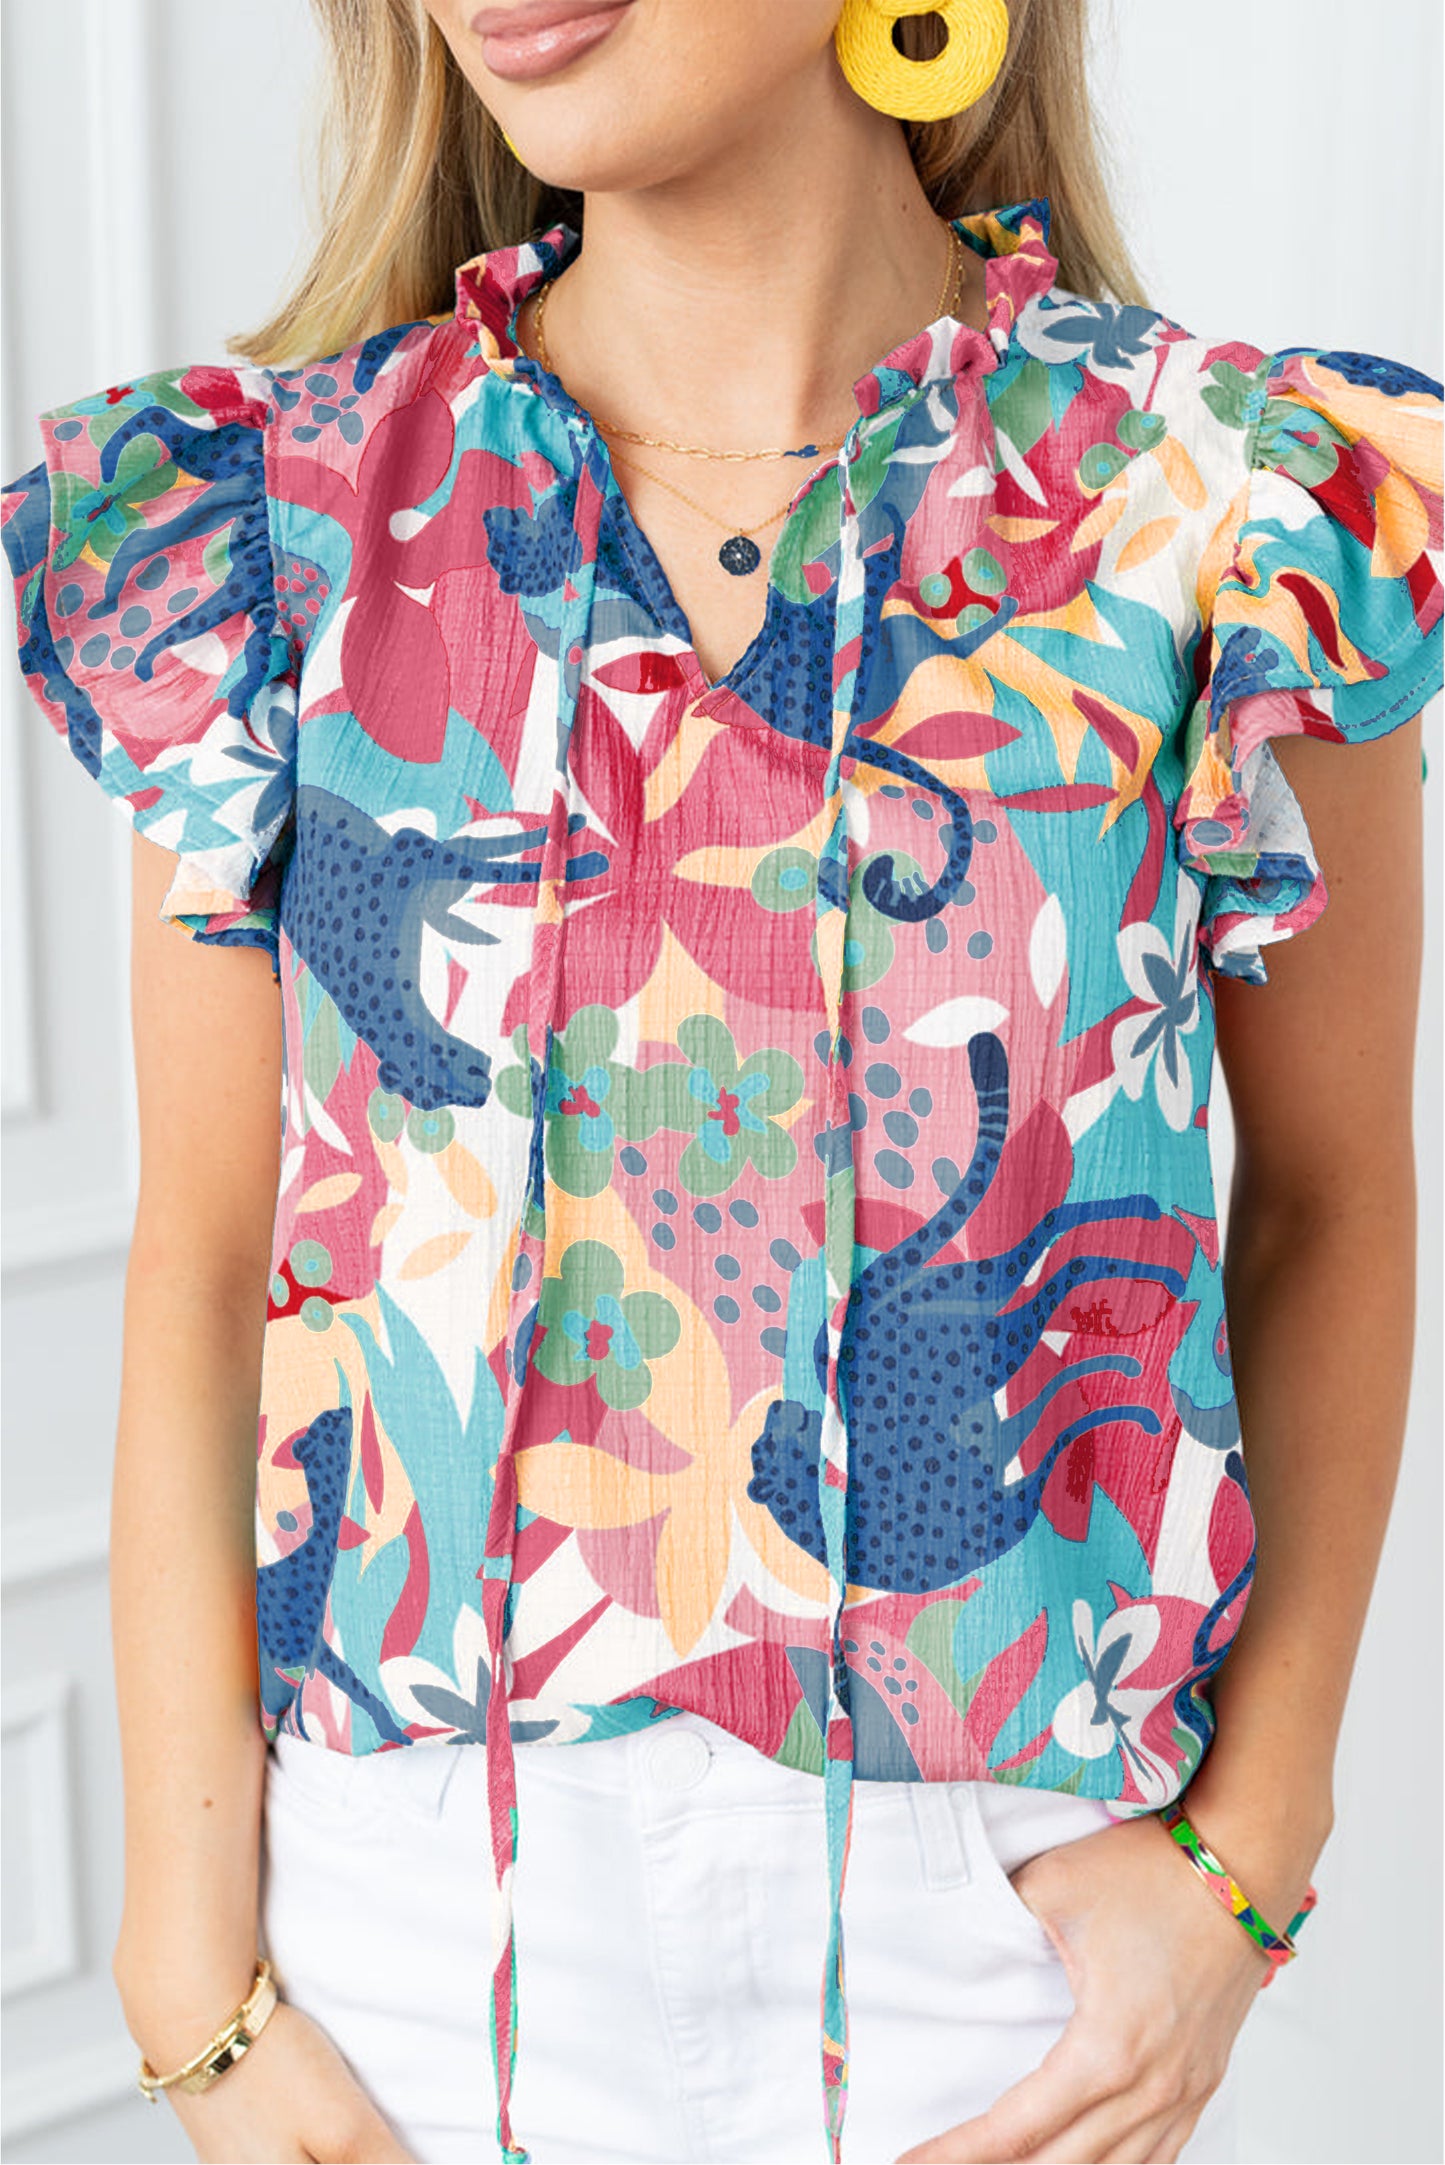 Sky Blue Frilly Ruffle Tie Split Neck Summer Floral Blouse Pre Order Tops JT's Designer Fashion